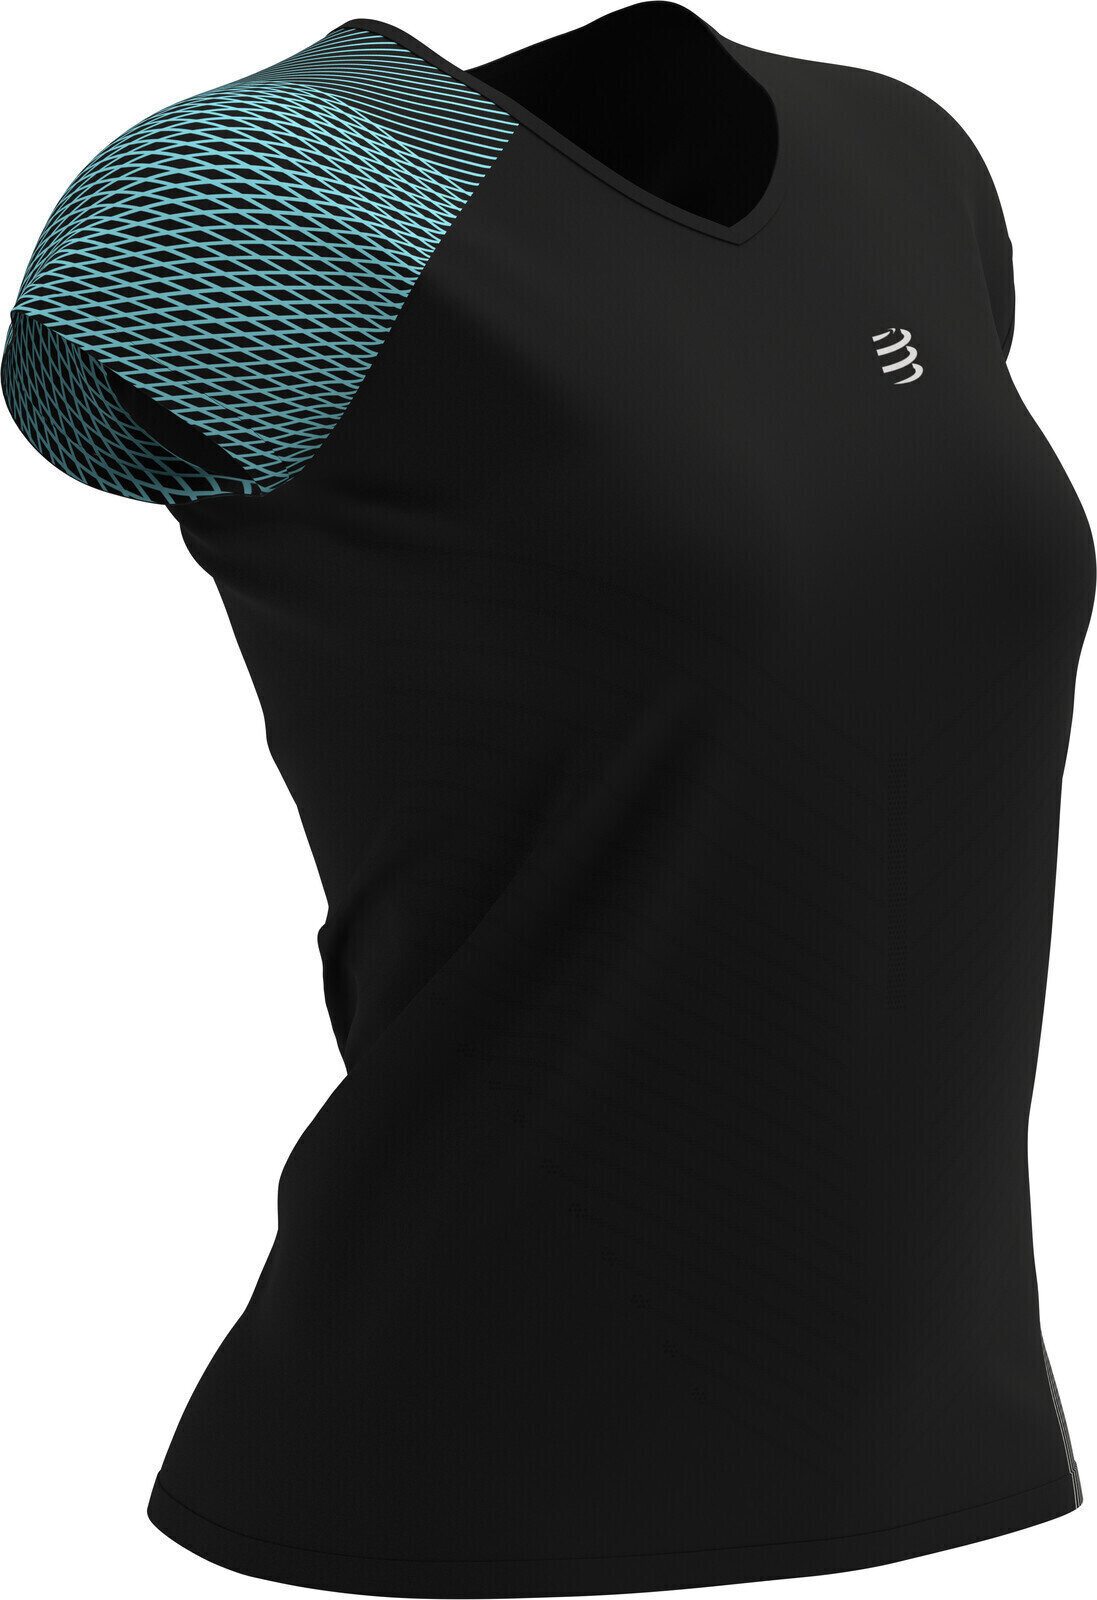 Rövidujjú futópólók
 Compressport Performance T-Shirt Black L Rövidujjú futópólók